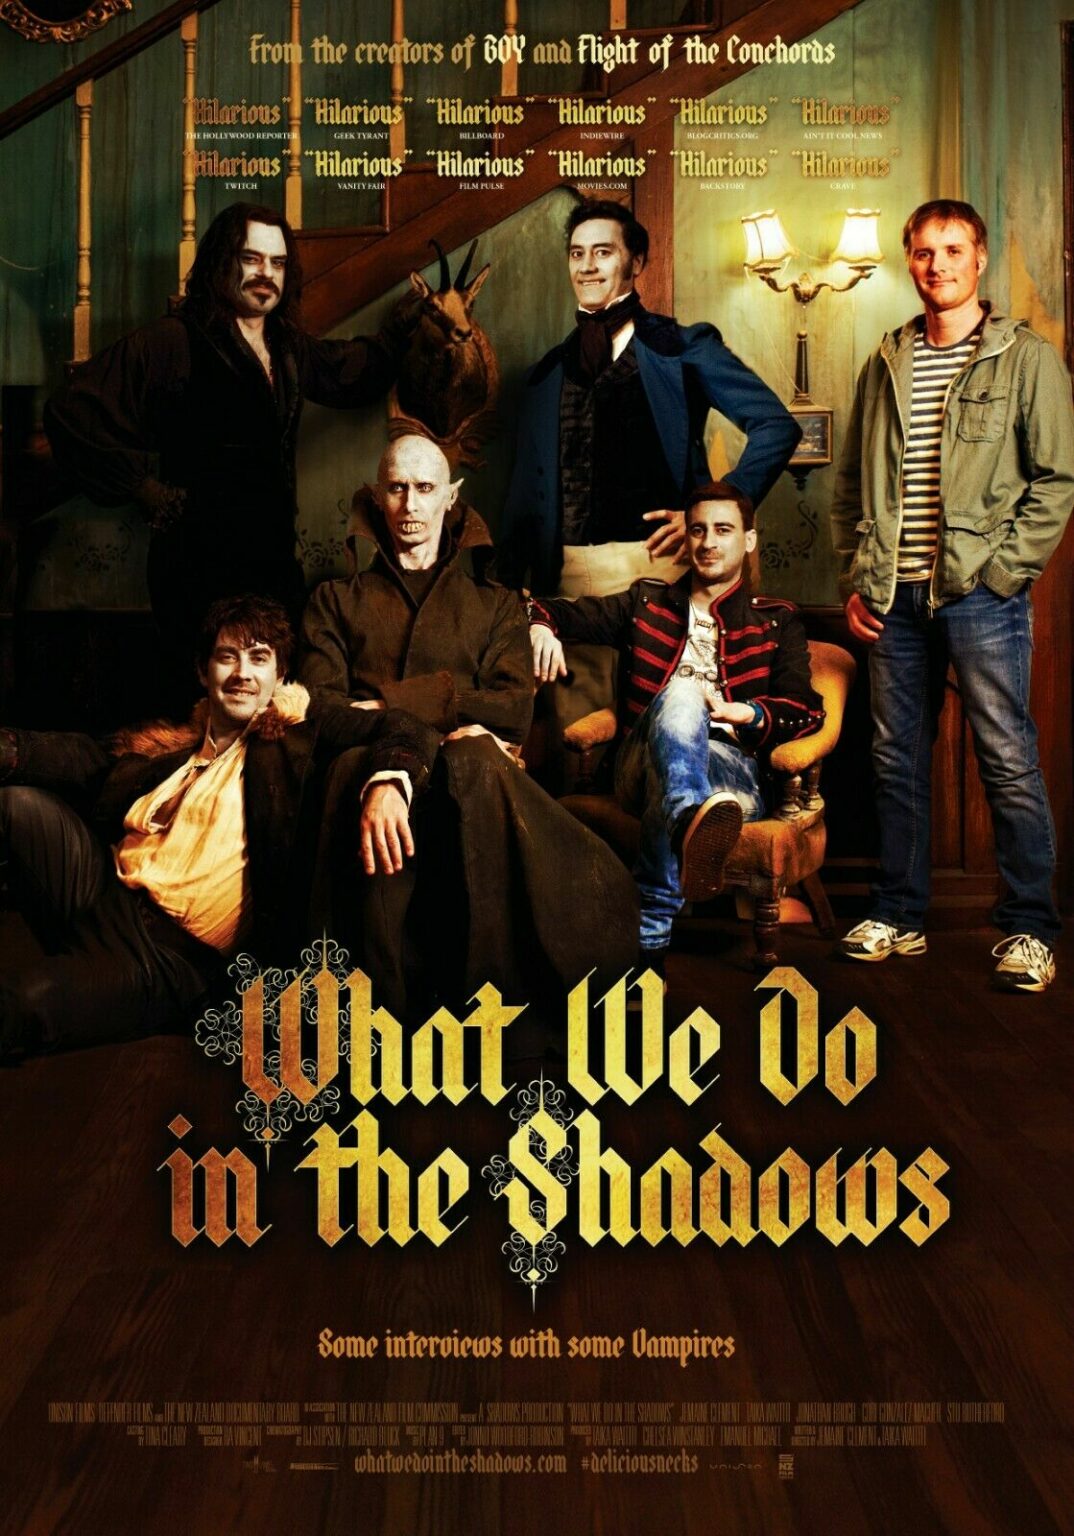 Vita-da-vampiro-What-We-Do-in-the-Shadows-poster-locandina-film-da